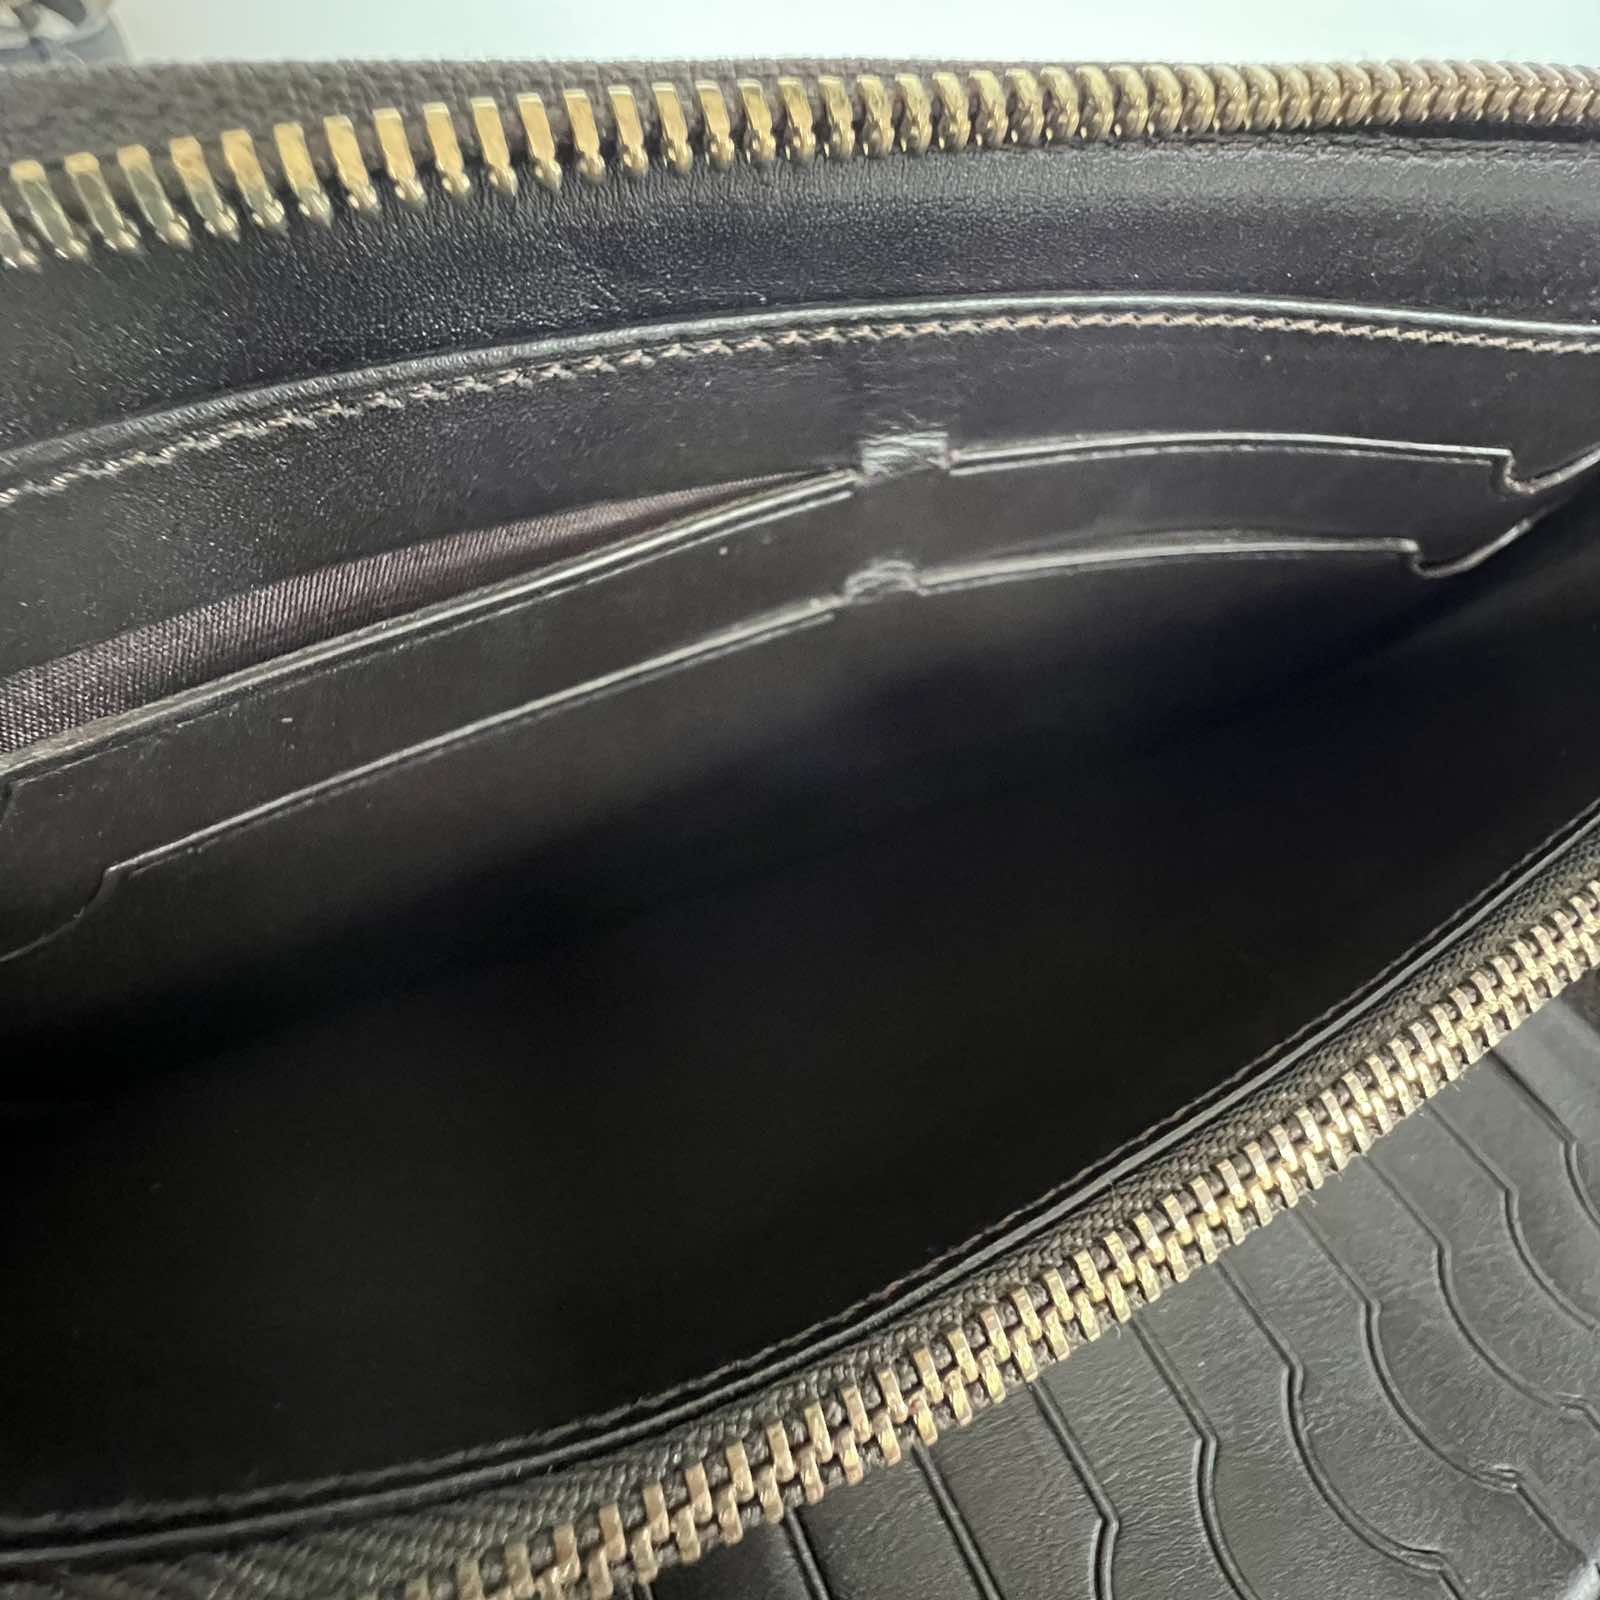 Faure Le Page Long Zippy Wallet. With dustbag ❤️ - Canon E-Bags Prime